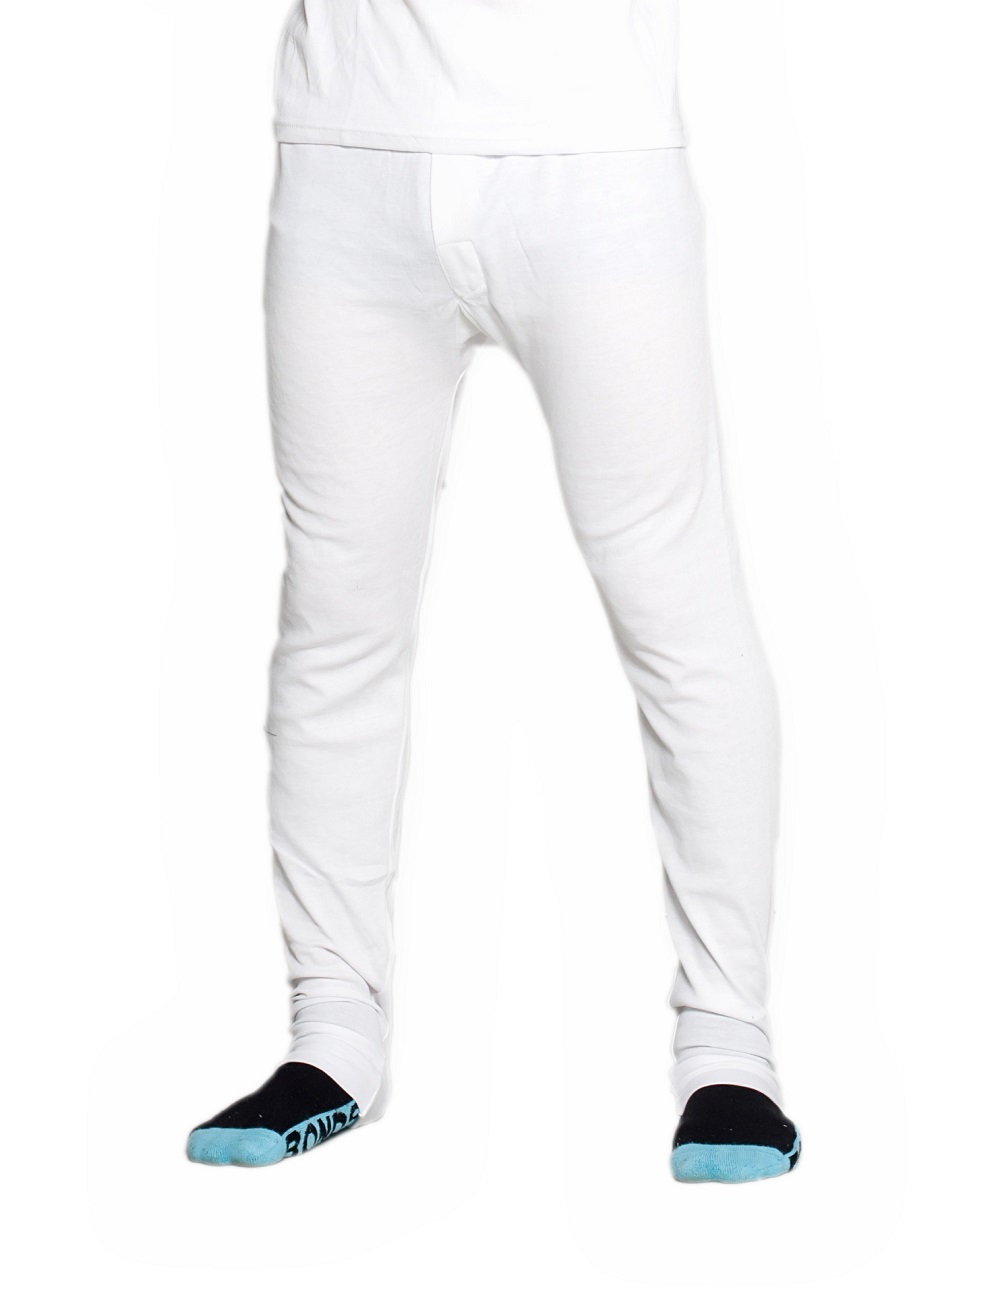 Mens White 2 Pack Cotton Blend Thermal Underwear Long Johns Pants